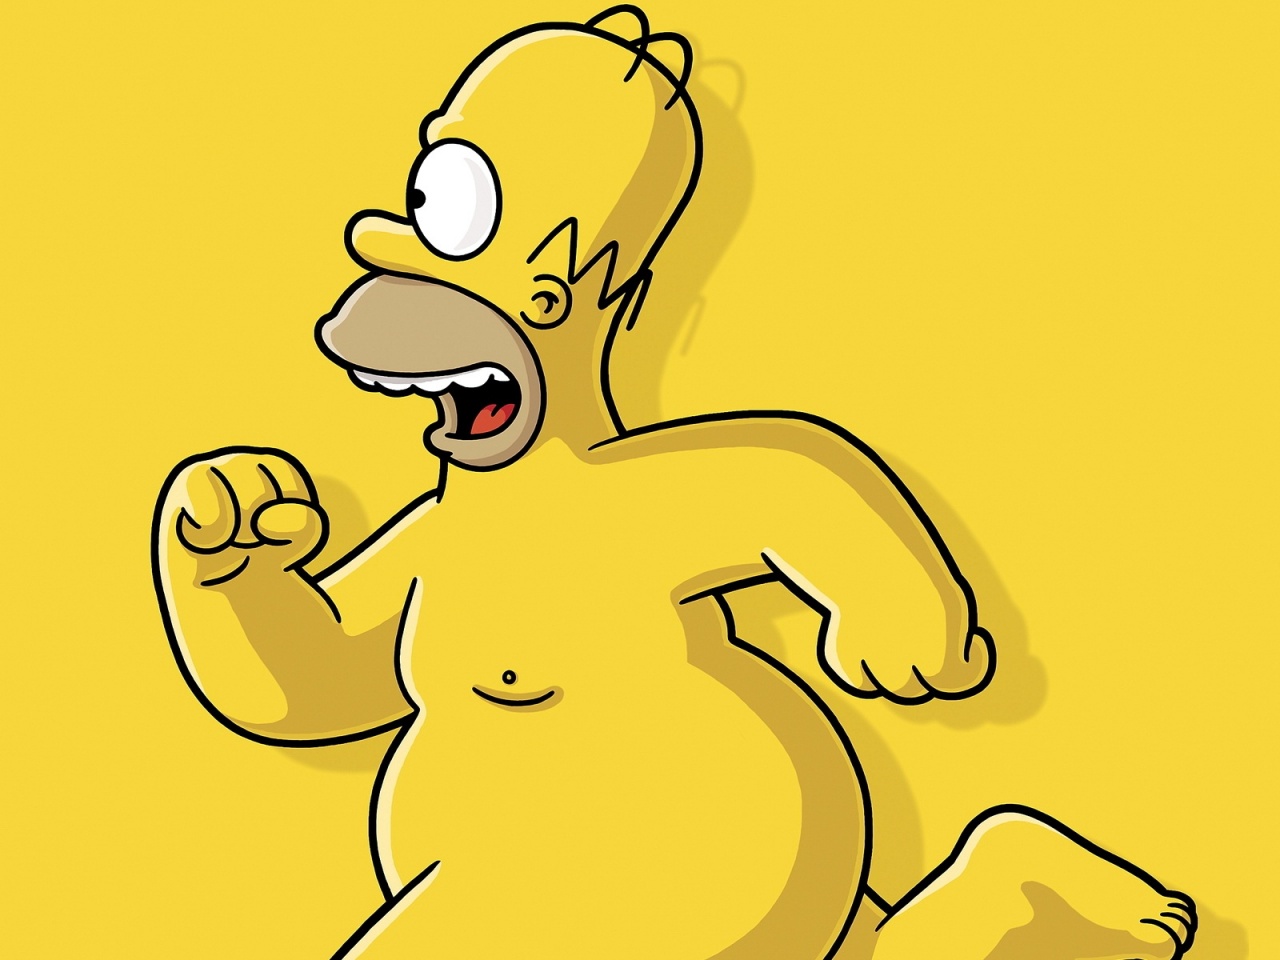 Nackt simpson Marge Simpson